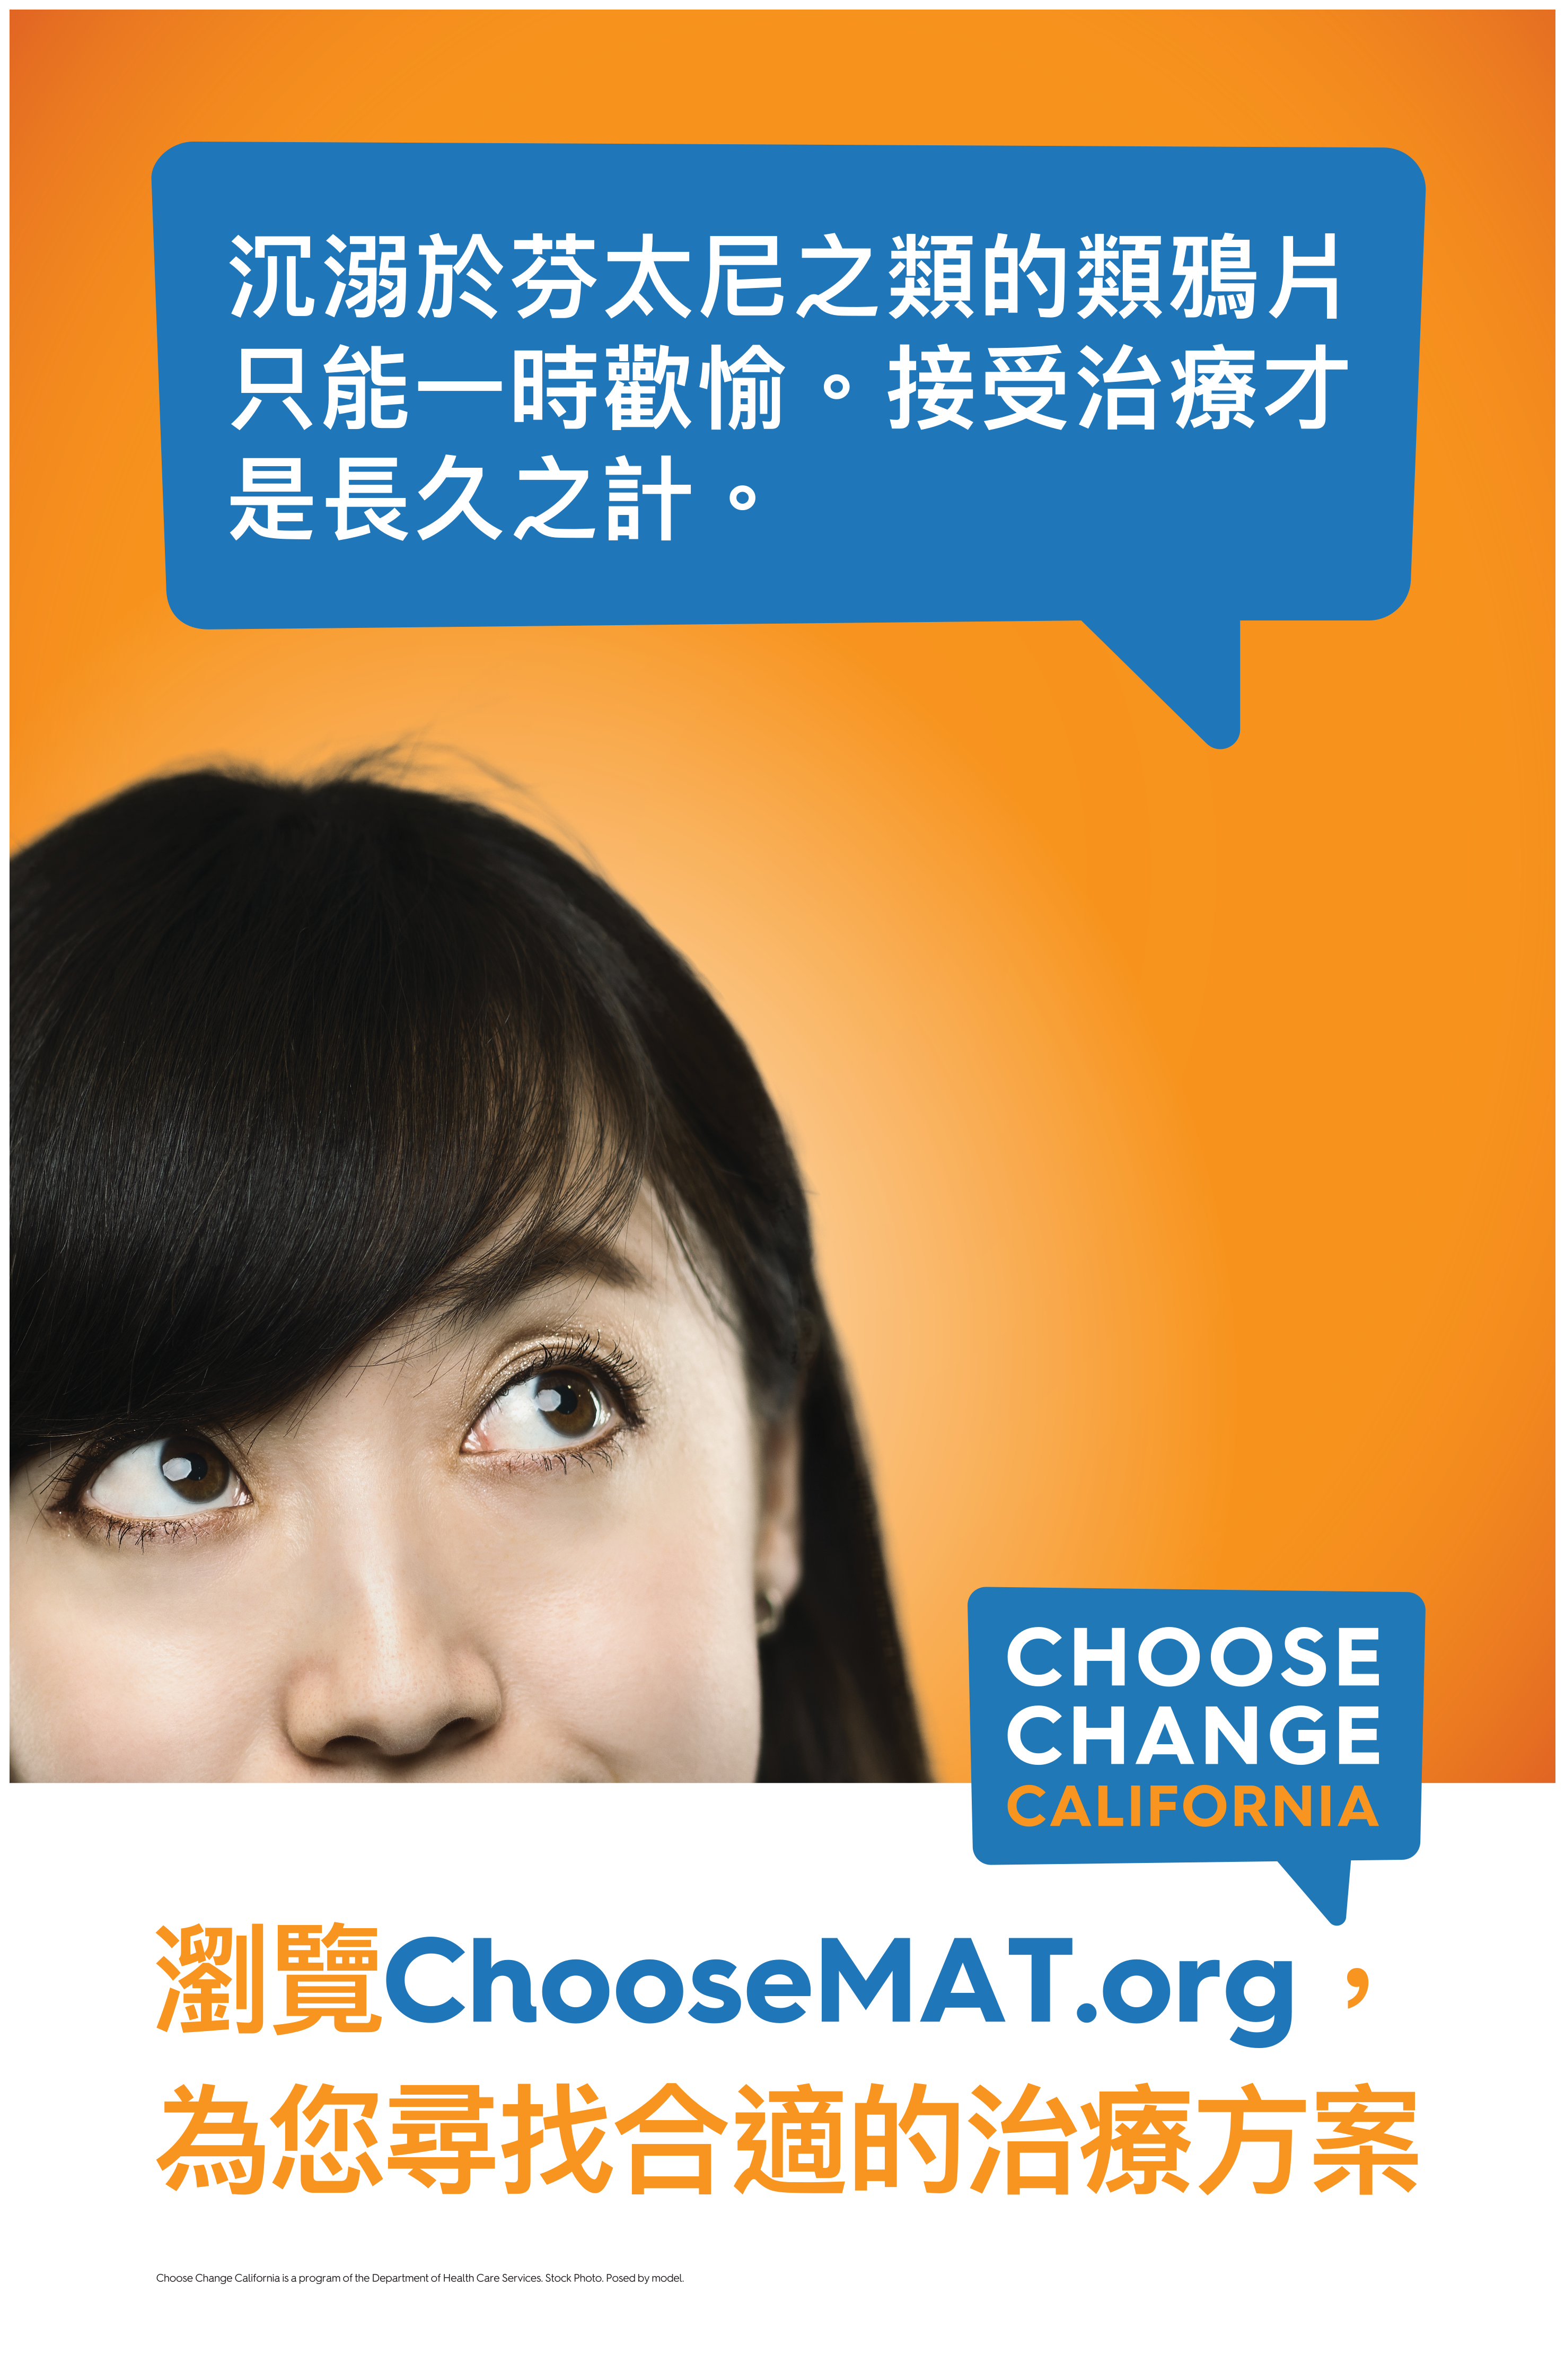 Pictured: Choose Change California ChooseMAT.org poster in Mandarin